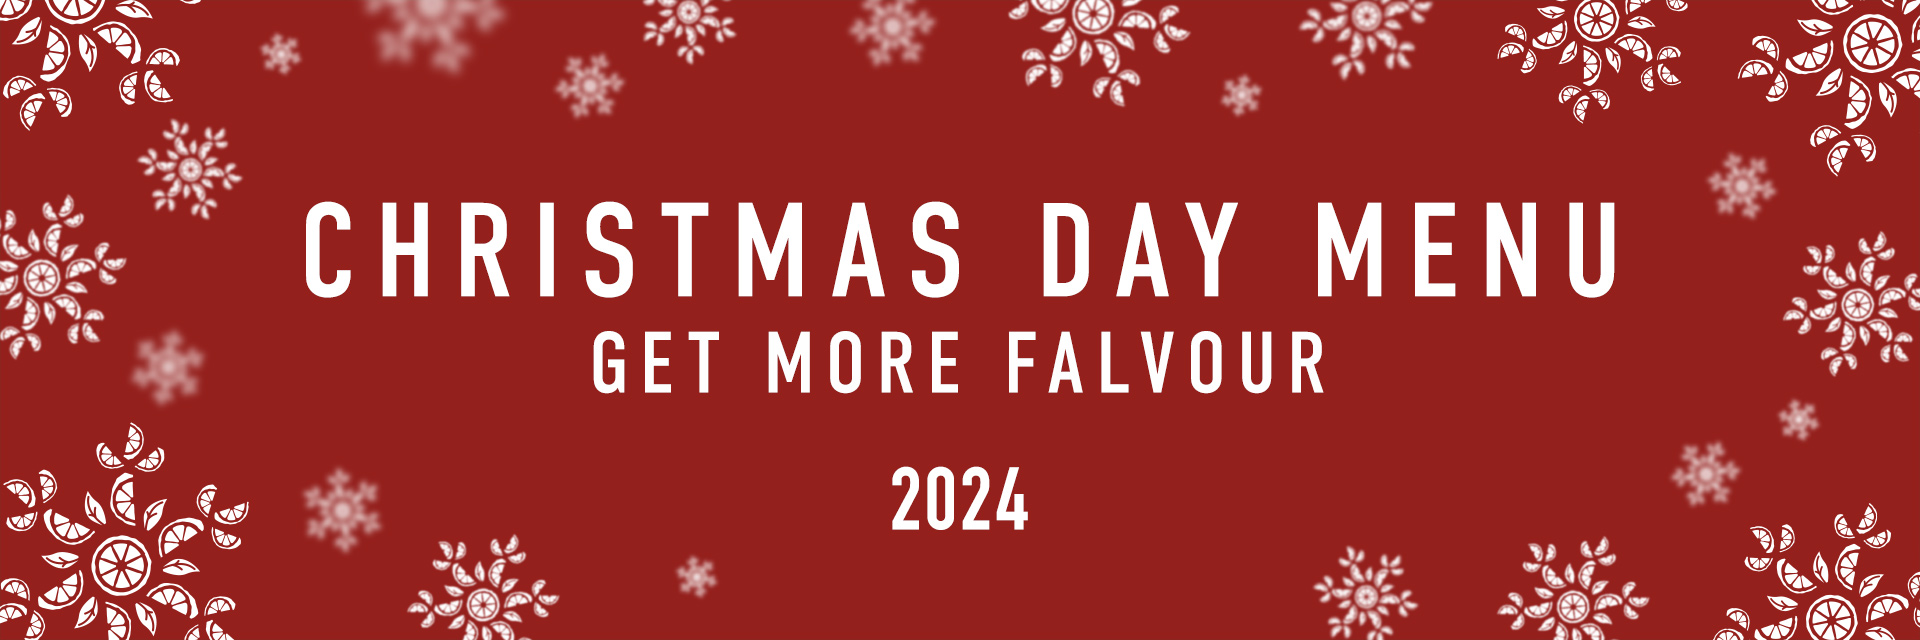 The Malt House Christmas Day Menu 2024  - Harvester 